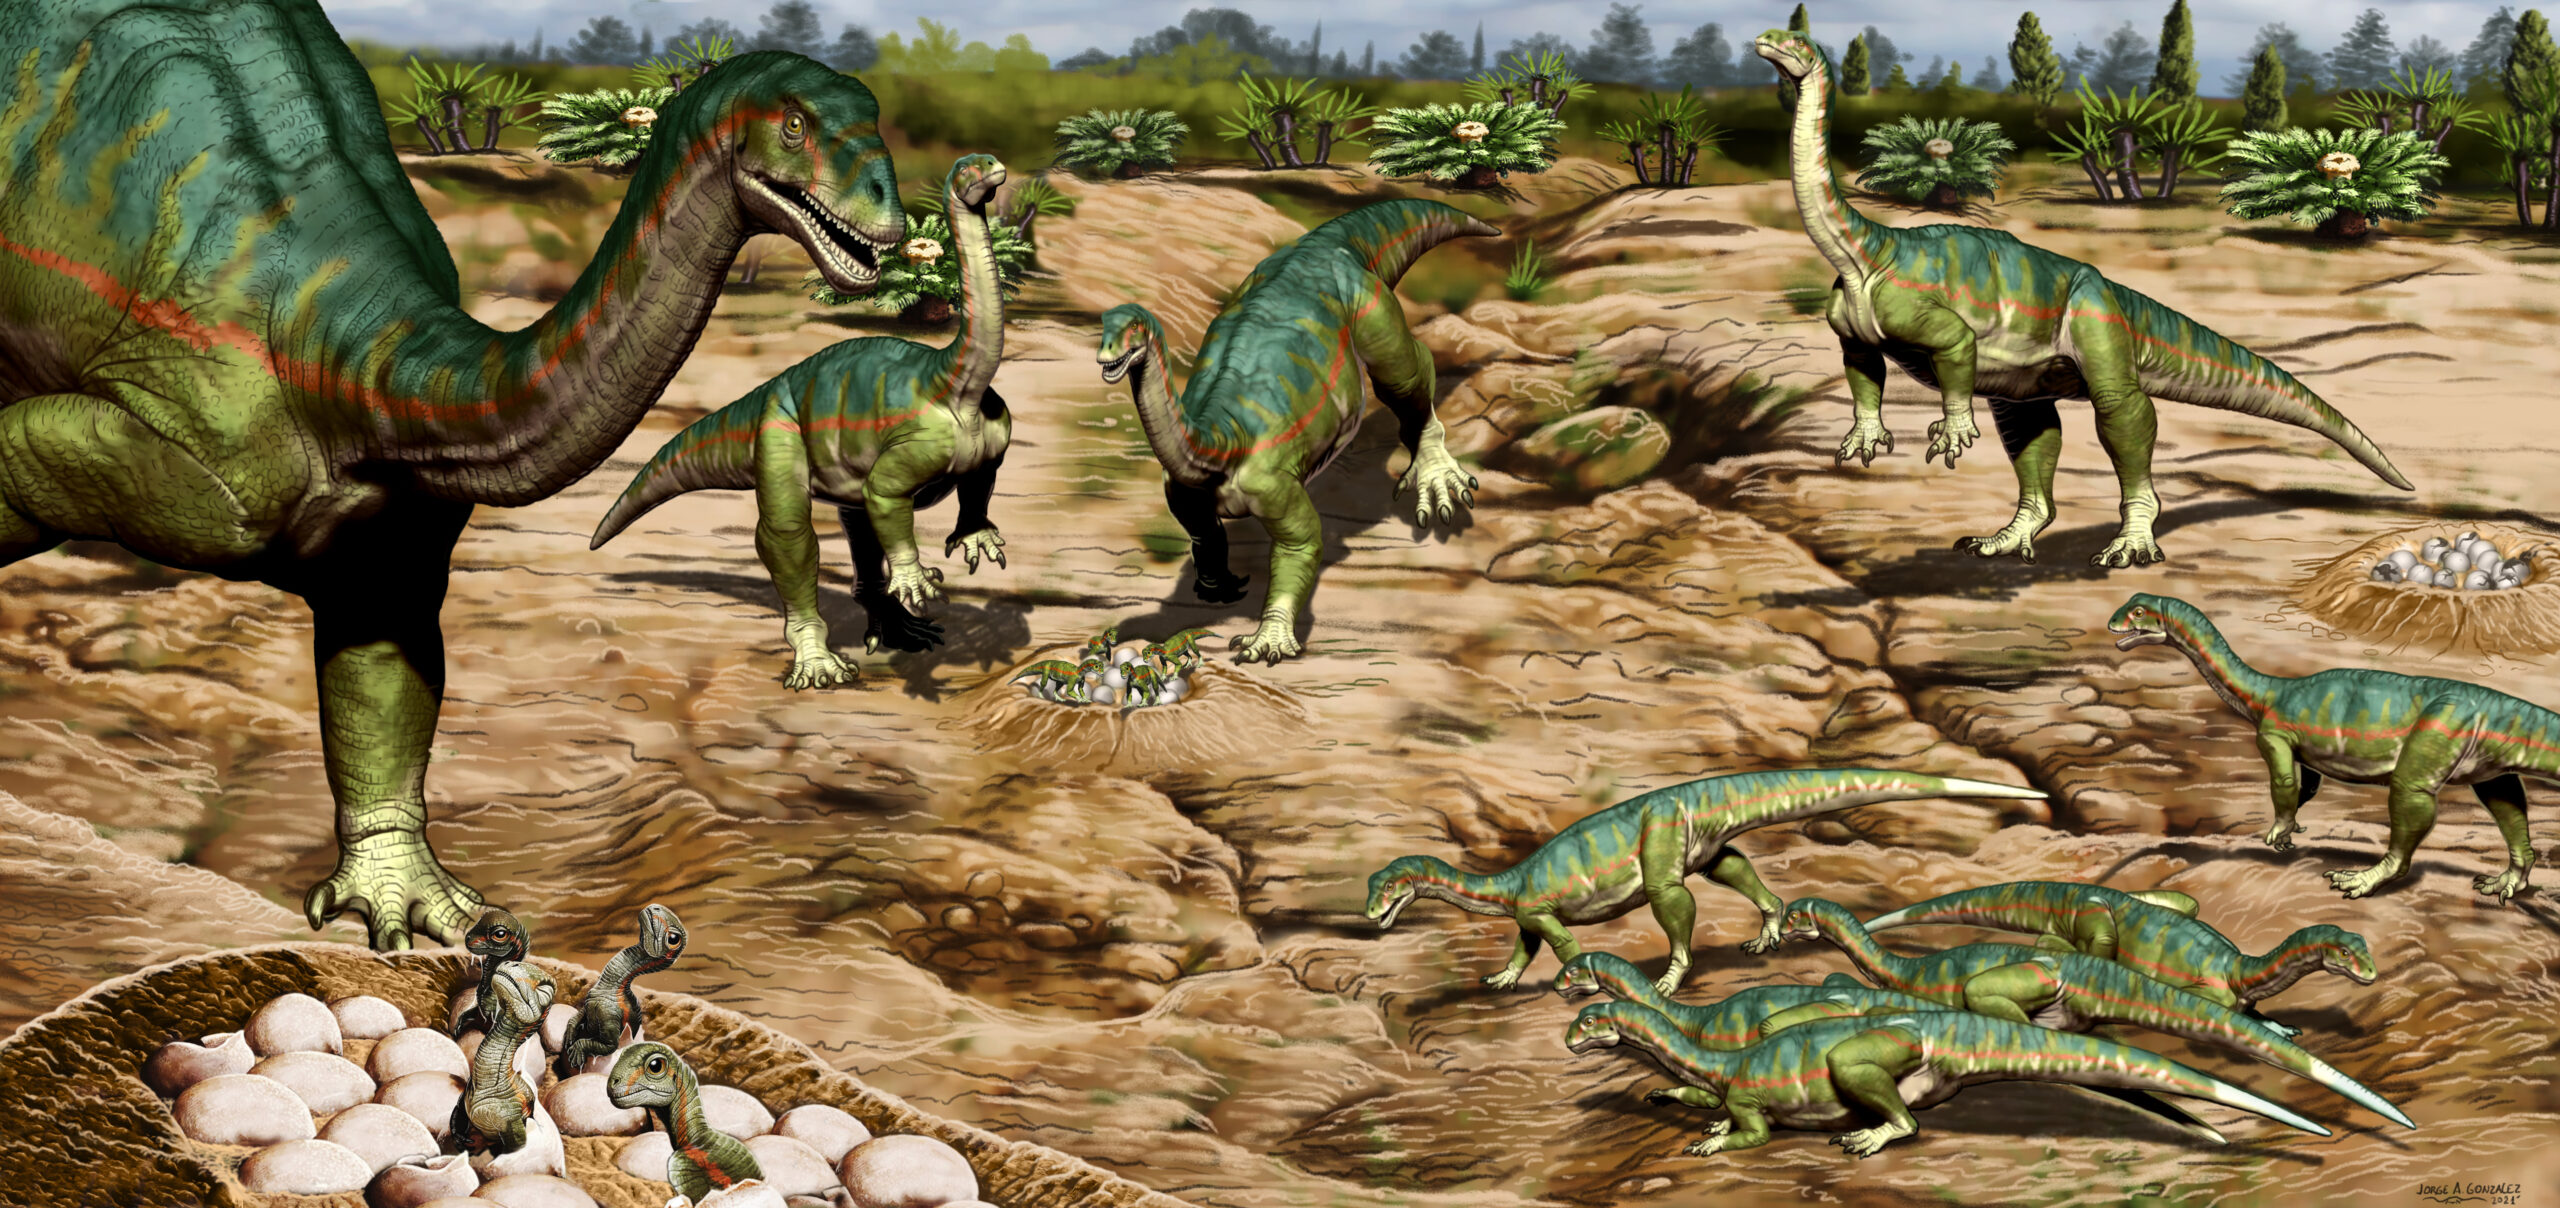 Dinosaurs who stuck together, survived together